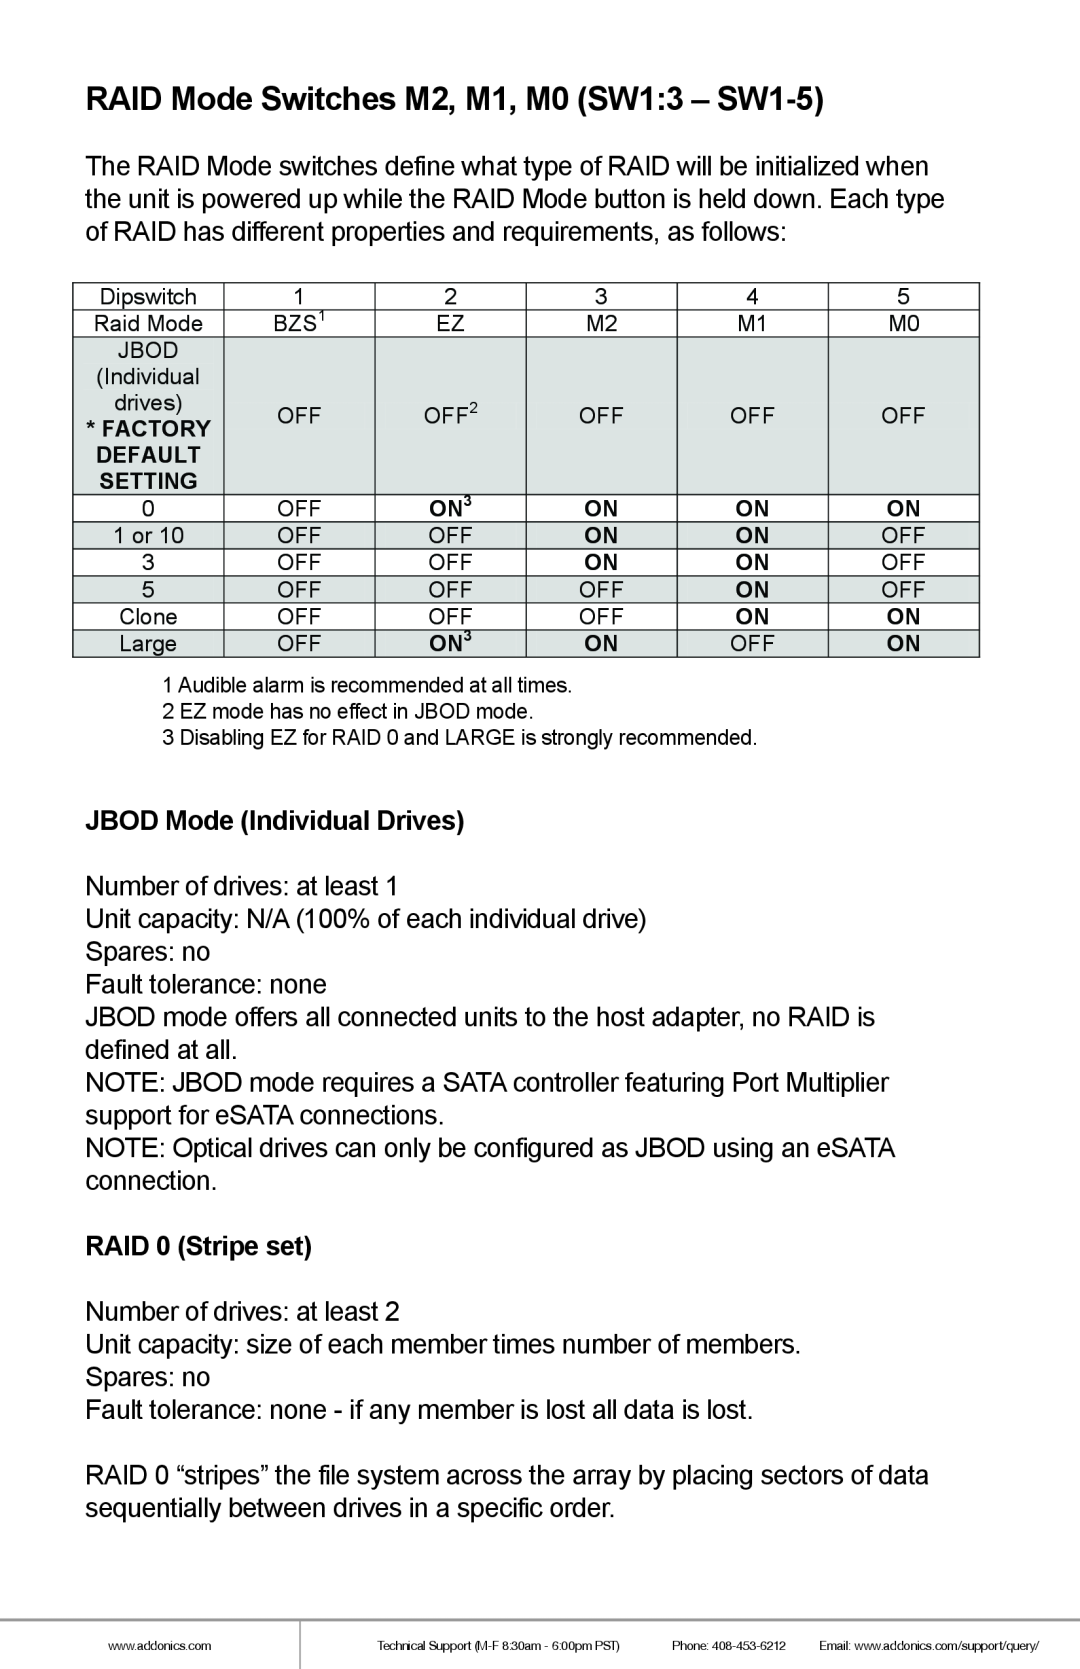 Addonics Technologies RTM2233EU3 manual RAID Mode Switches M2, M1, M0 SW13 - SW1-5, JBOD Mode Individual Drives 